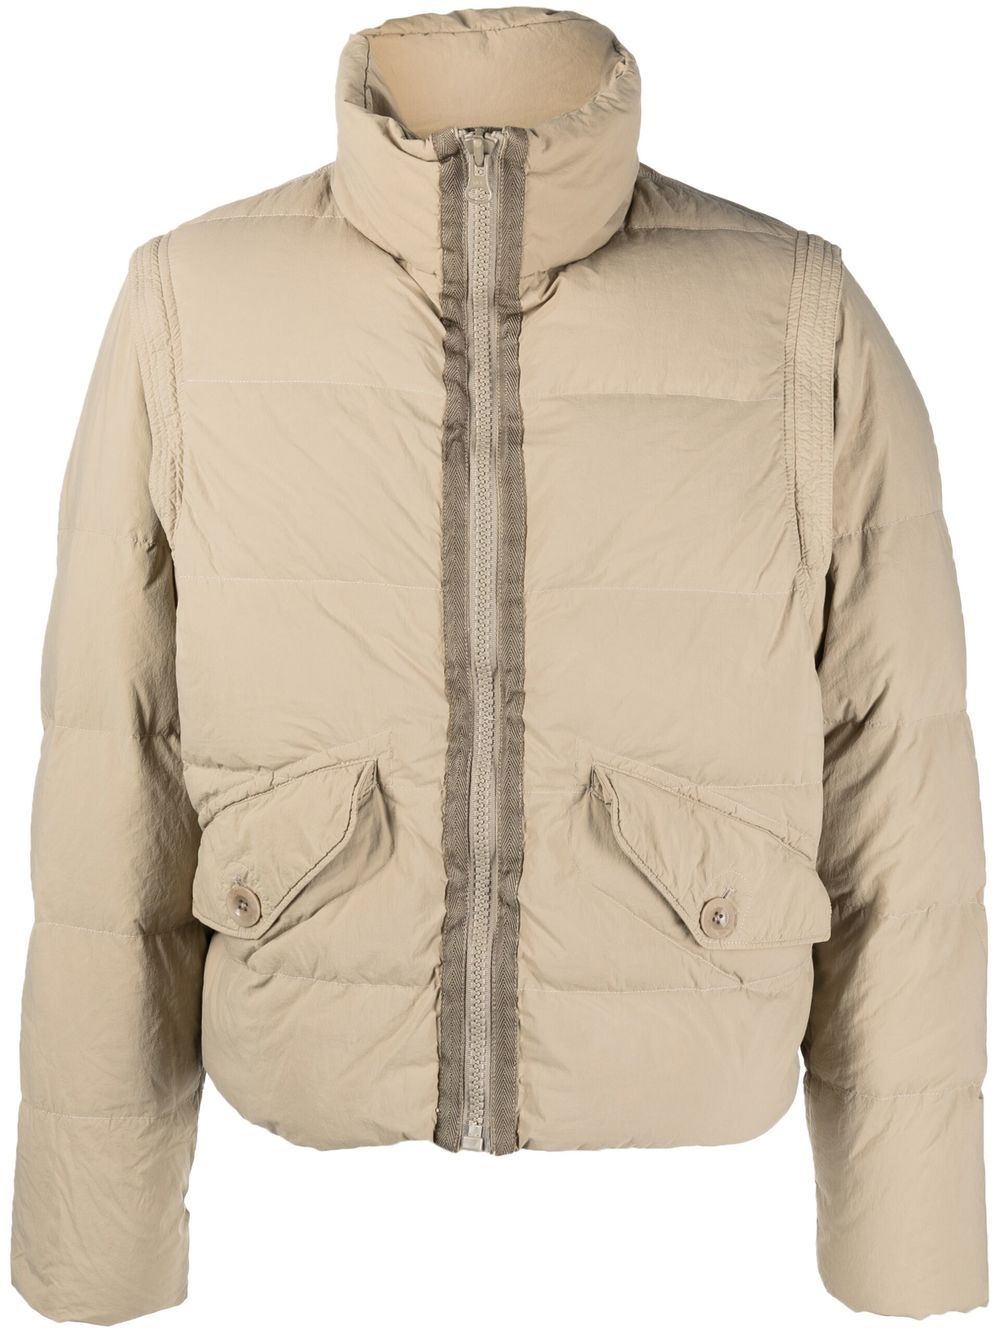 Austral padded jacket